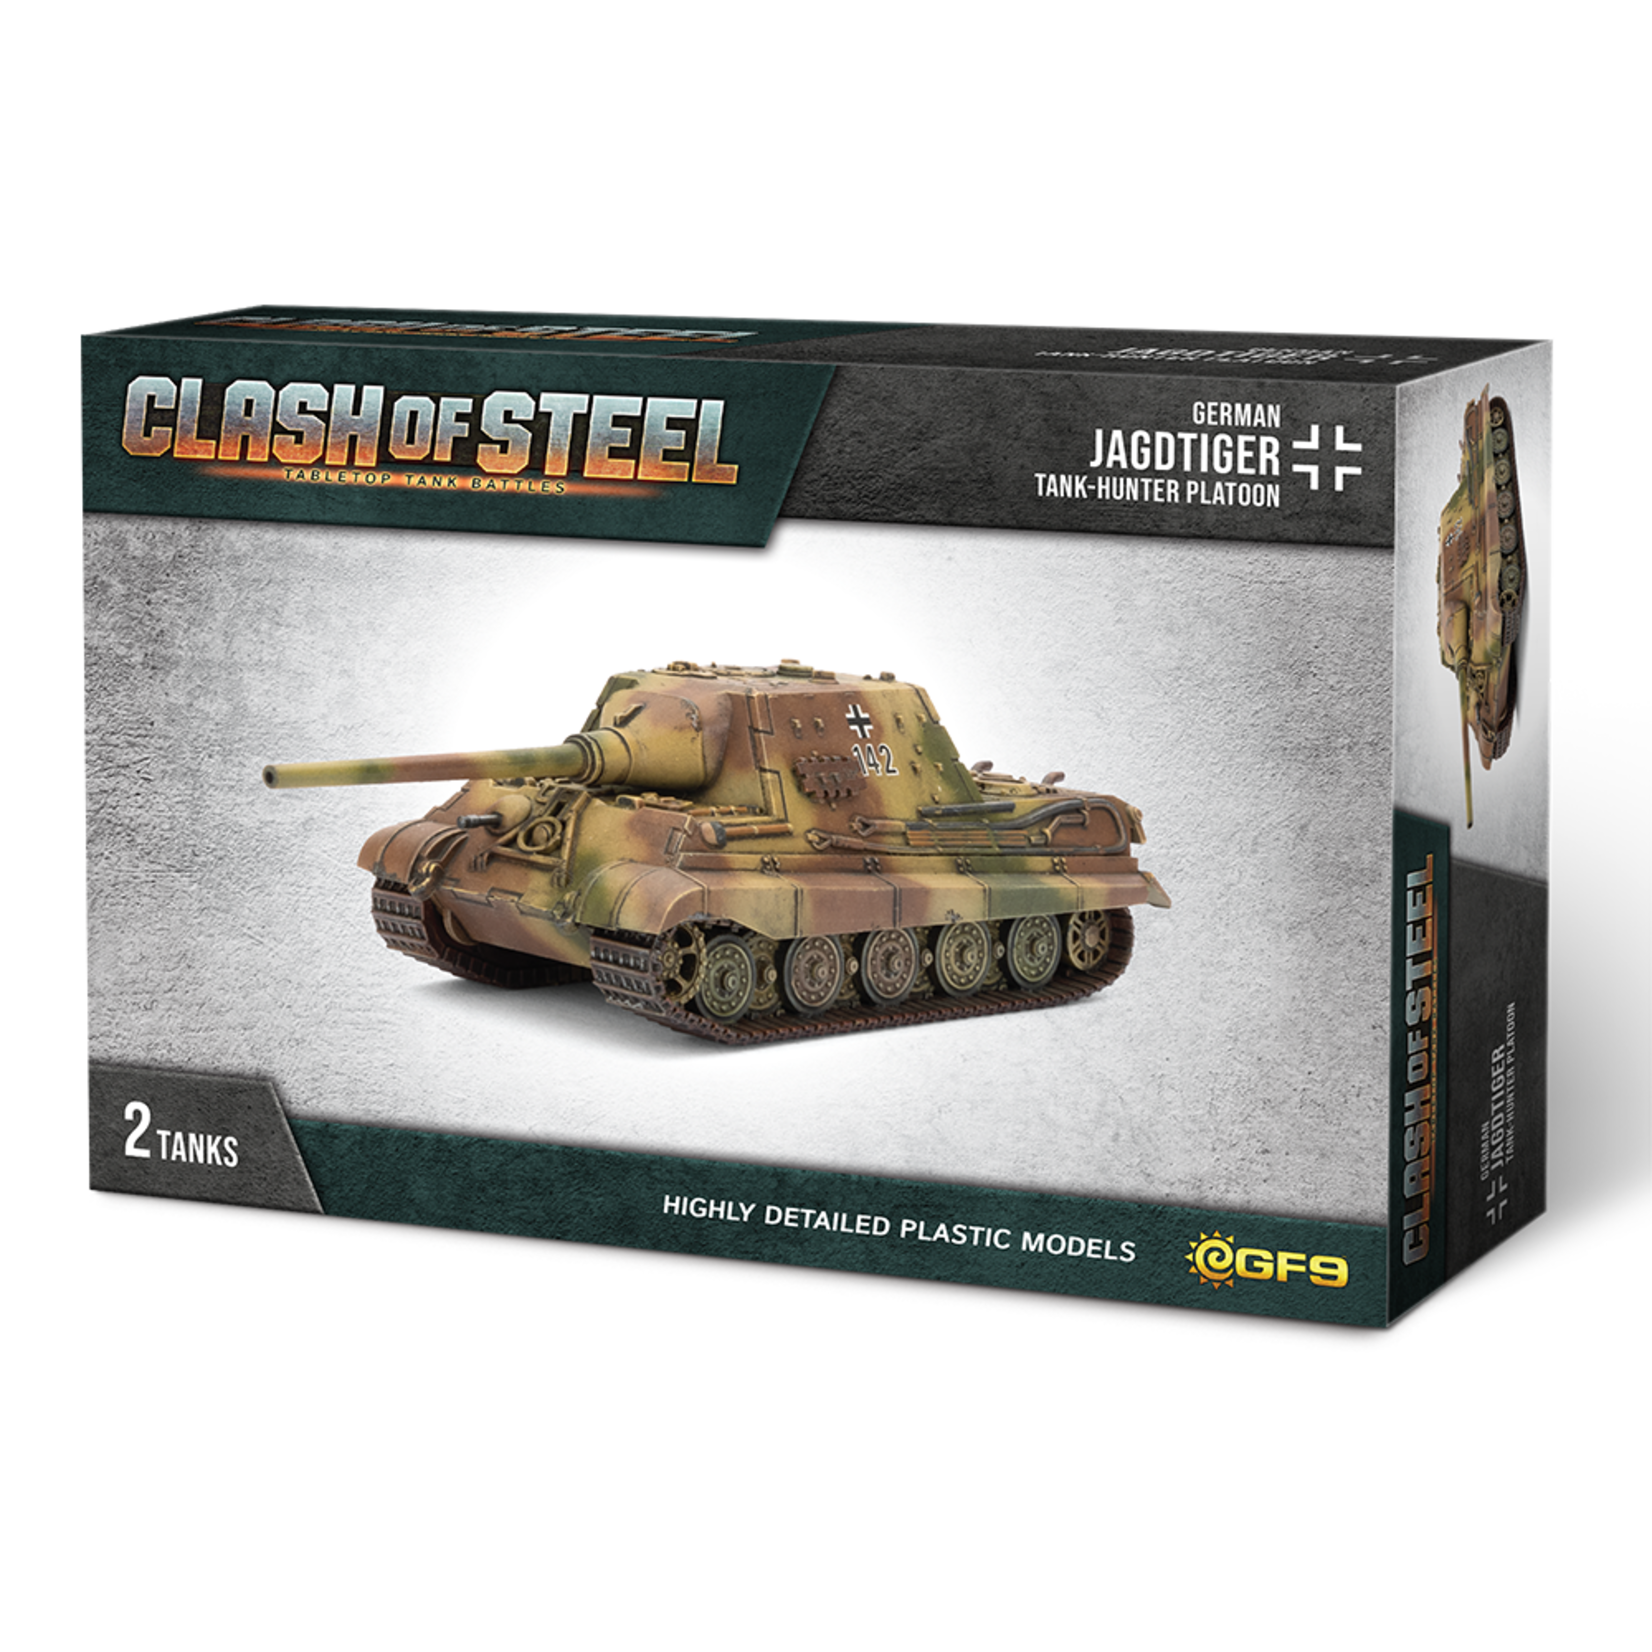 Battlefront Miniatures Clash of Steel Jagdtiger Tank-hunter Platoon